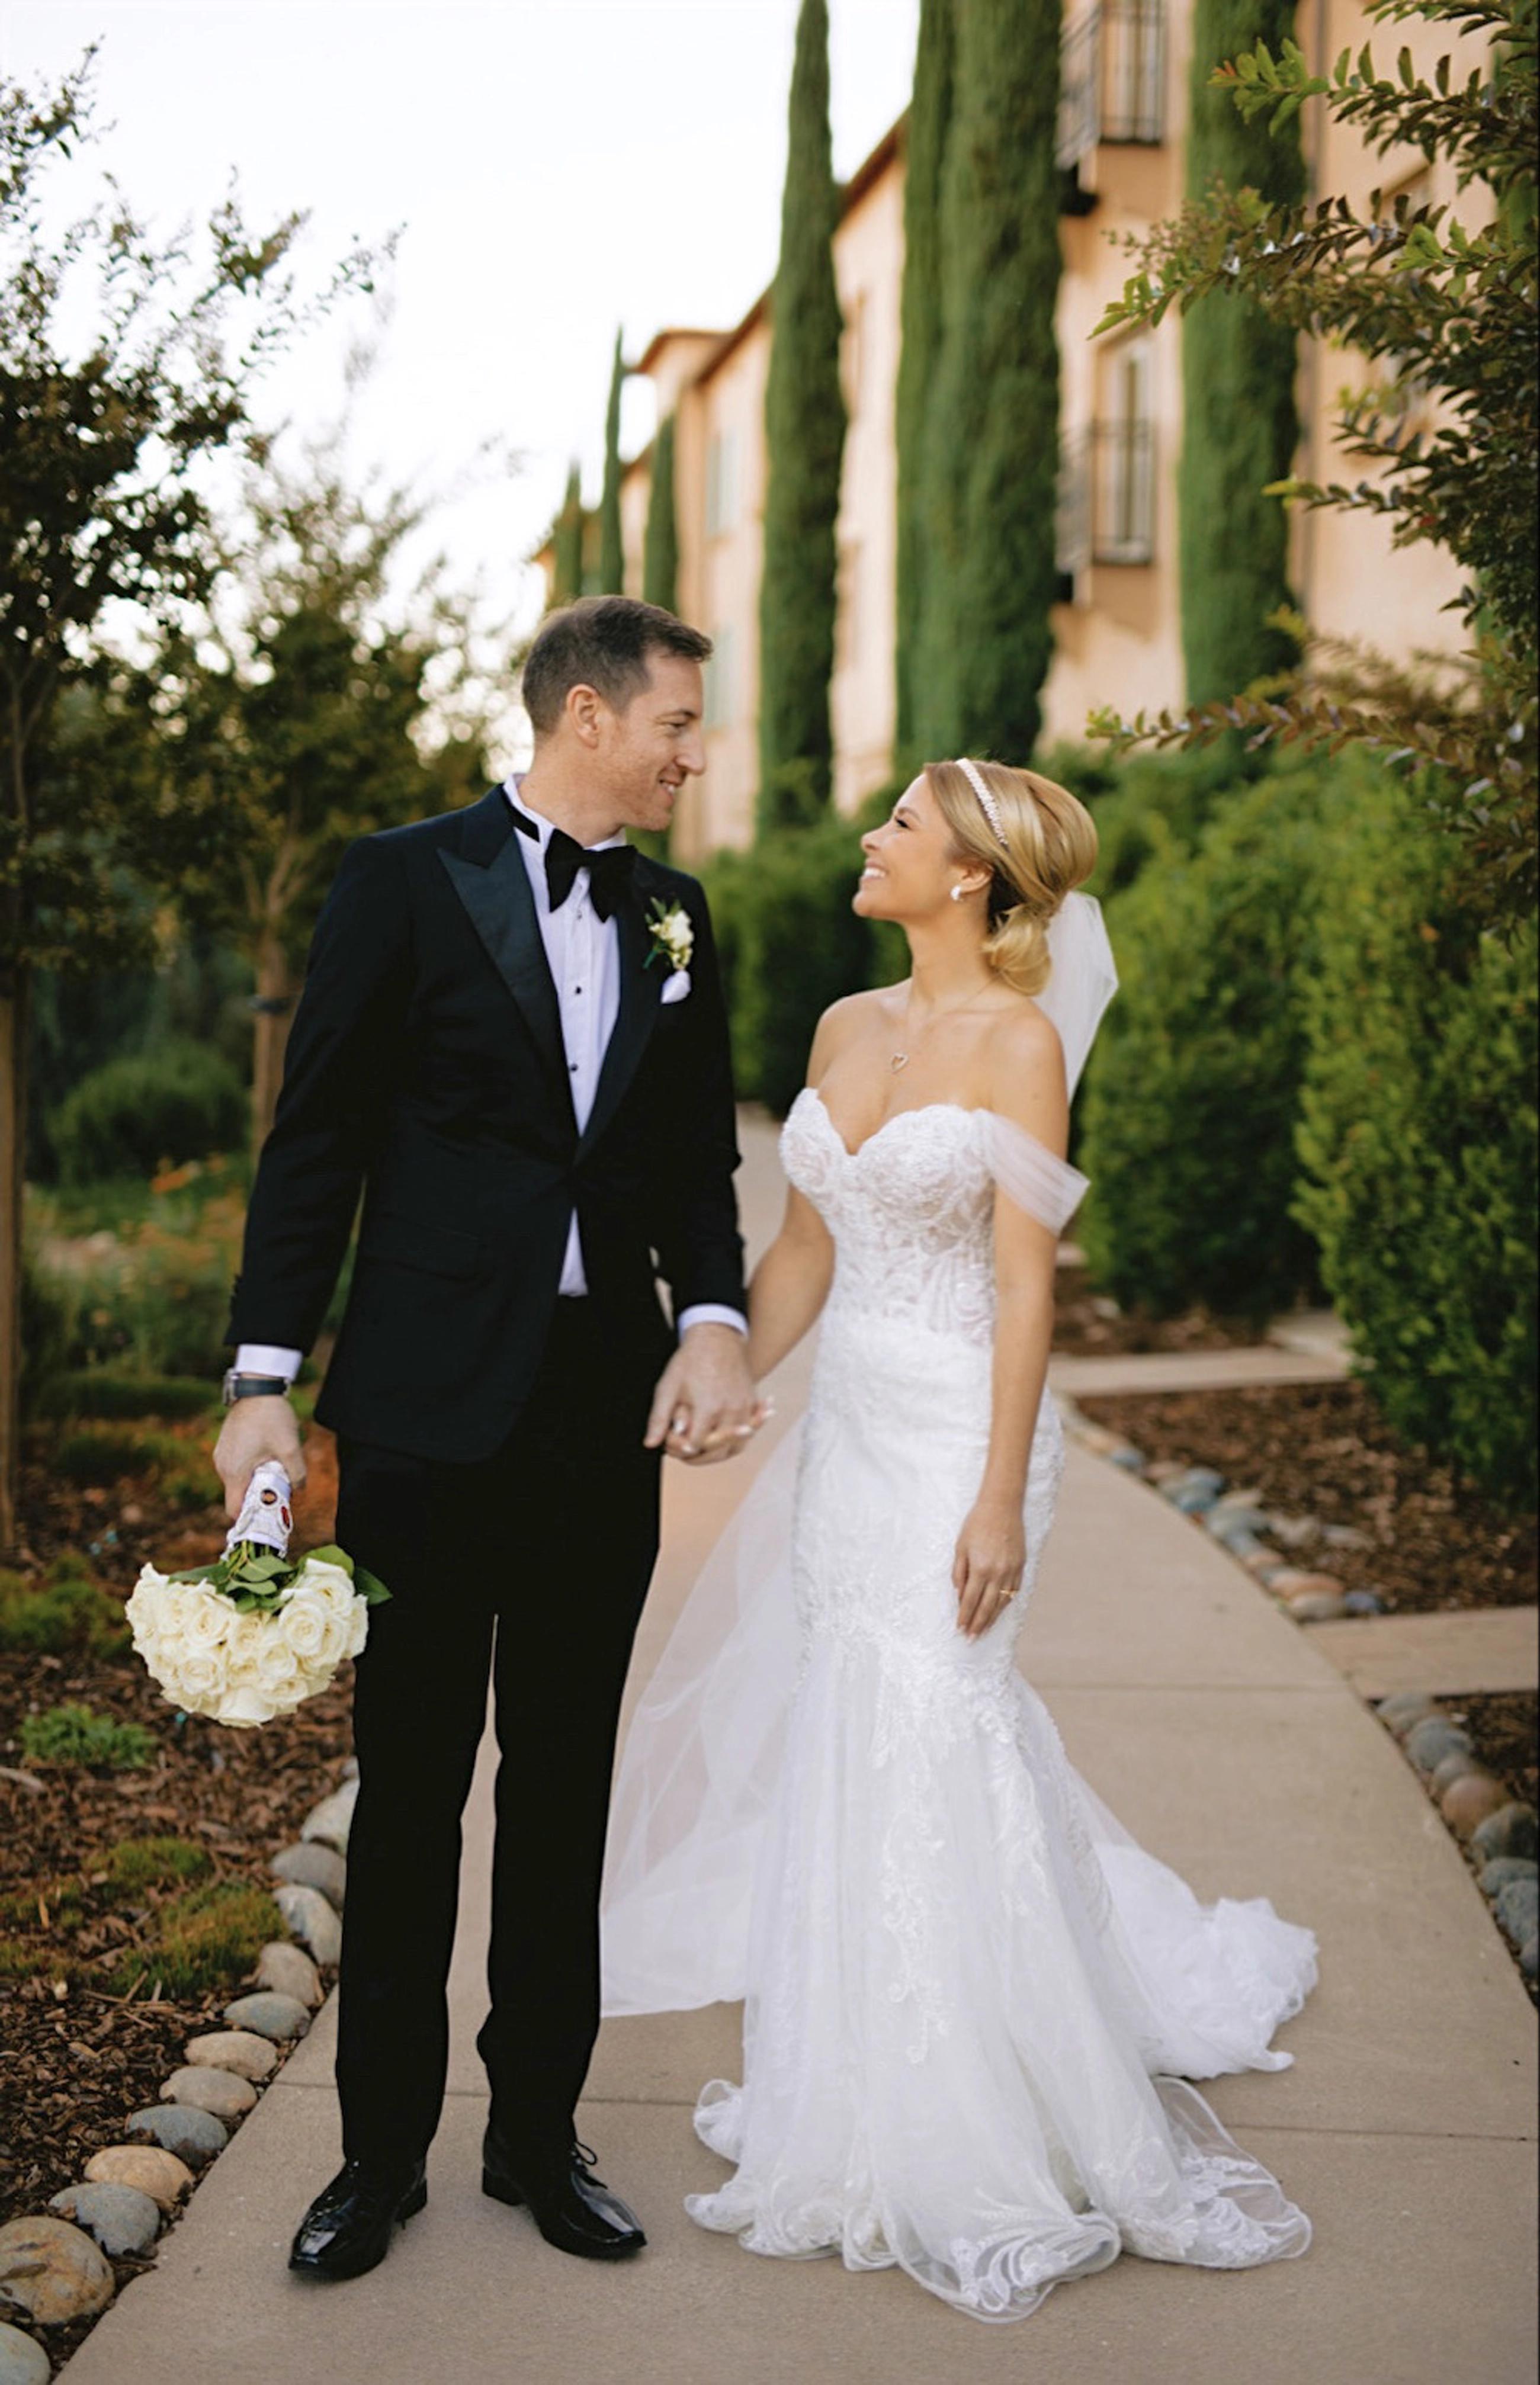 Nicole Marries John Wearing Beaded, Off the Shoulder Wedding Dress. Desktop Image